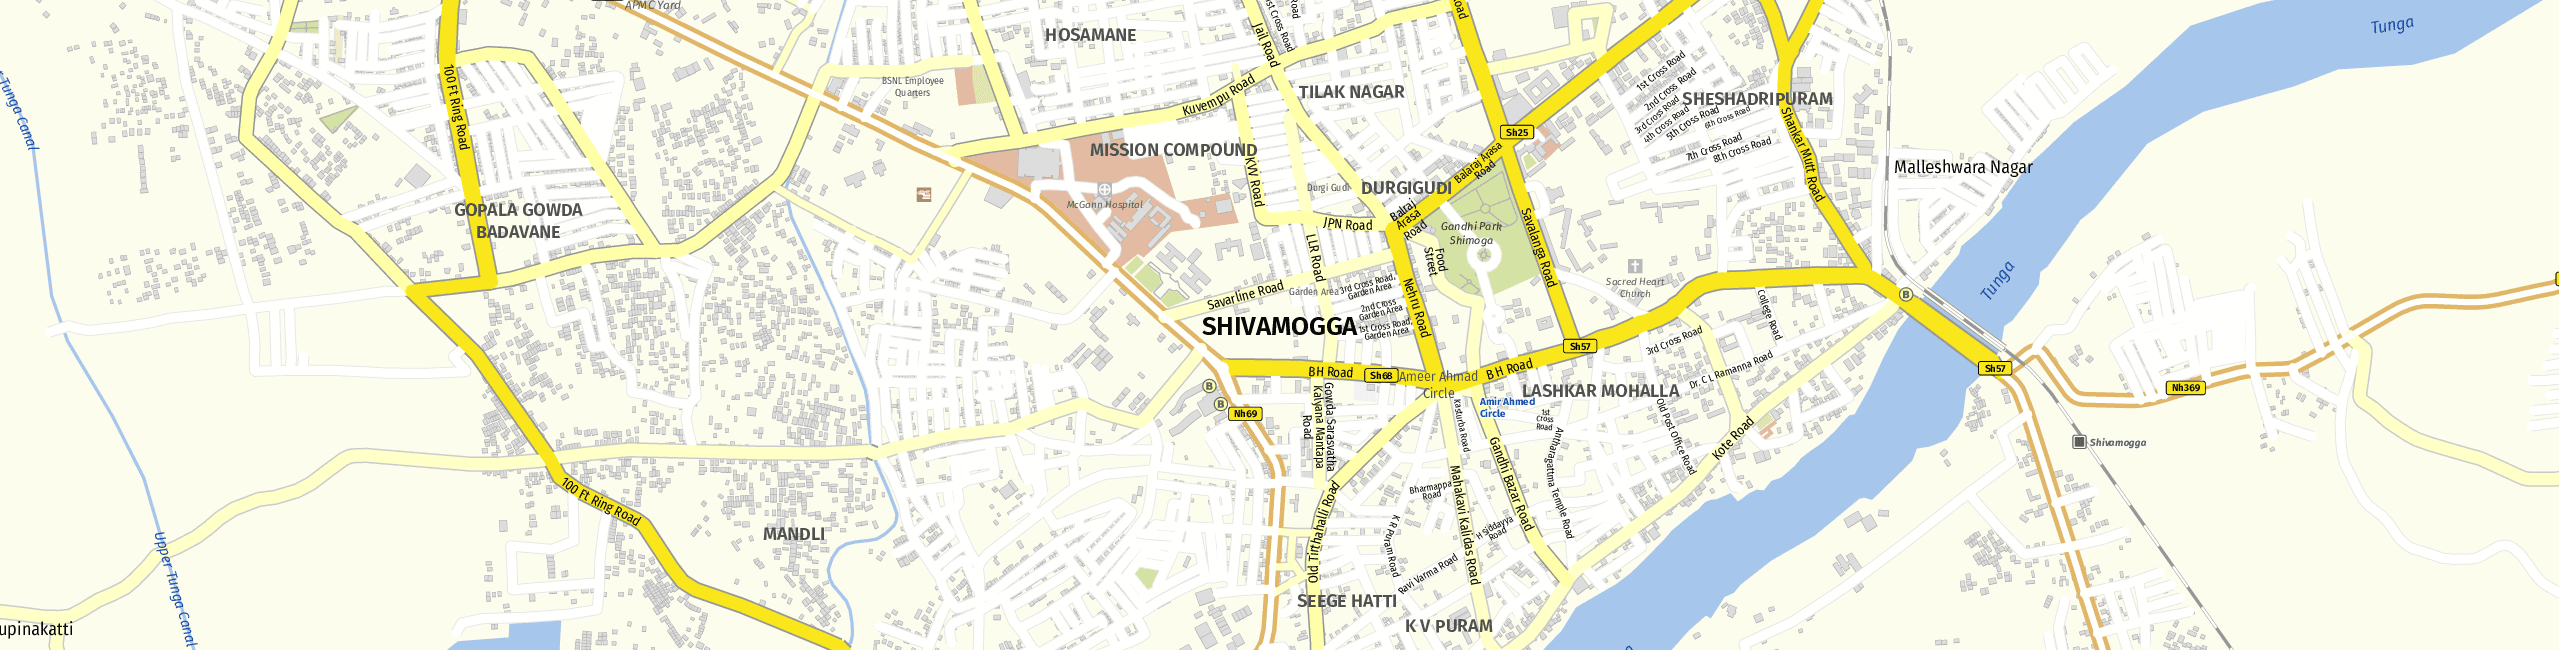 Stadtplan Shivamogga zum Downloaden.